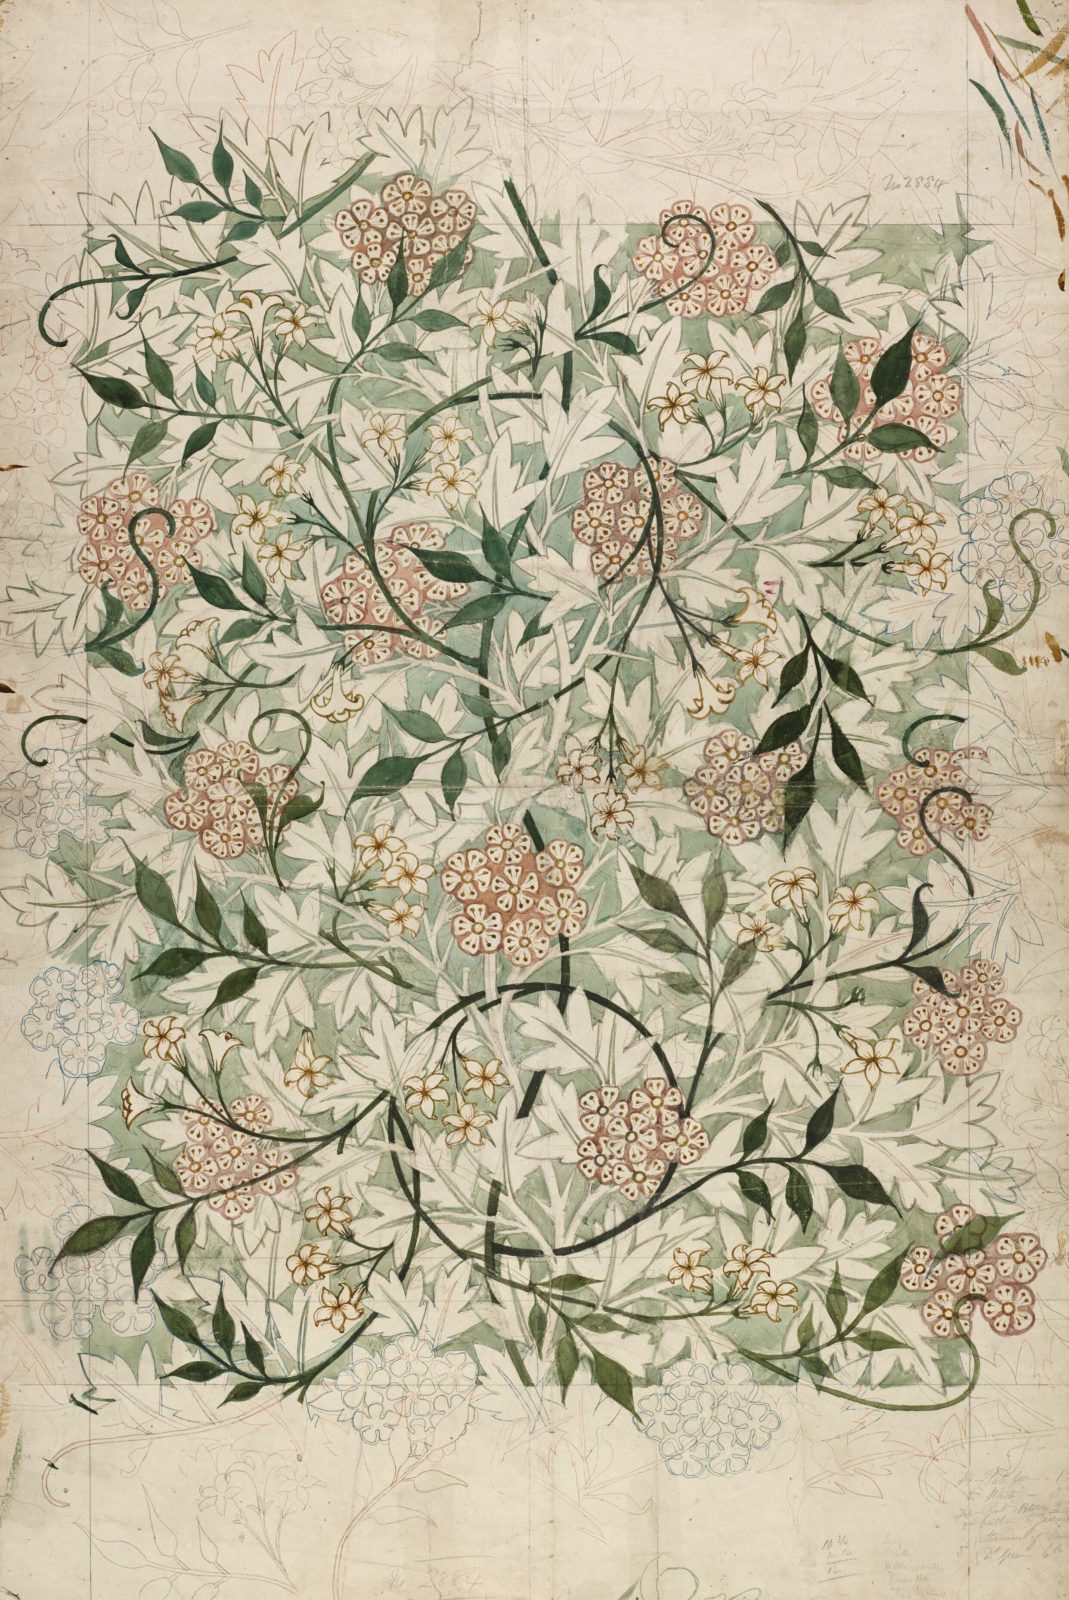 Floral wallpaper design by William Morris
